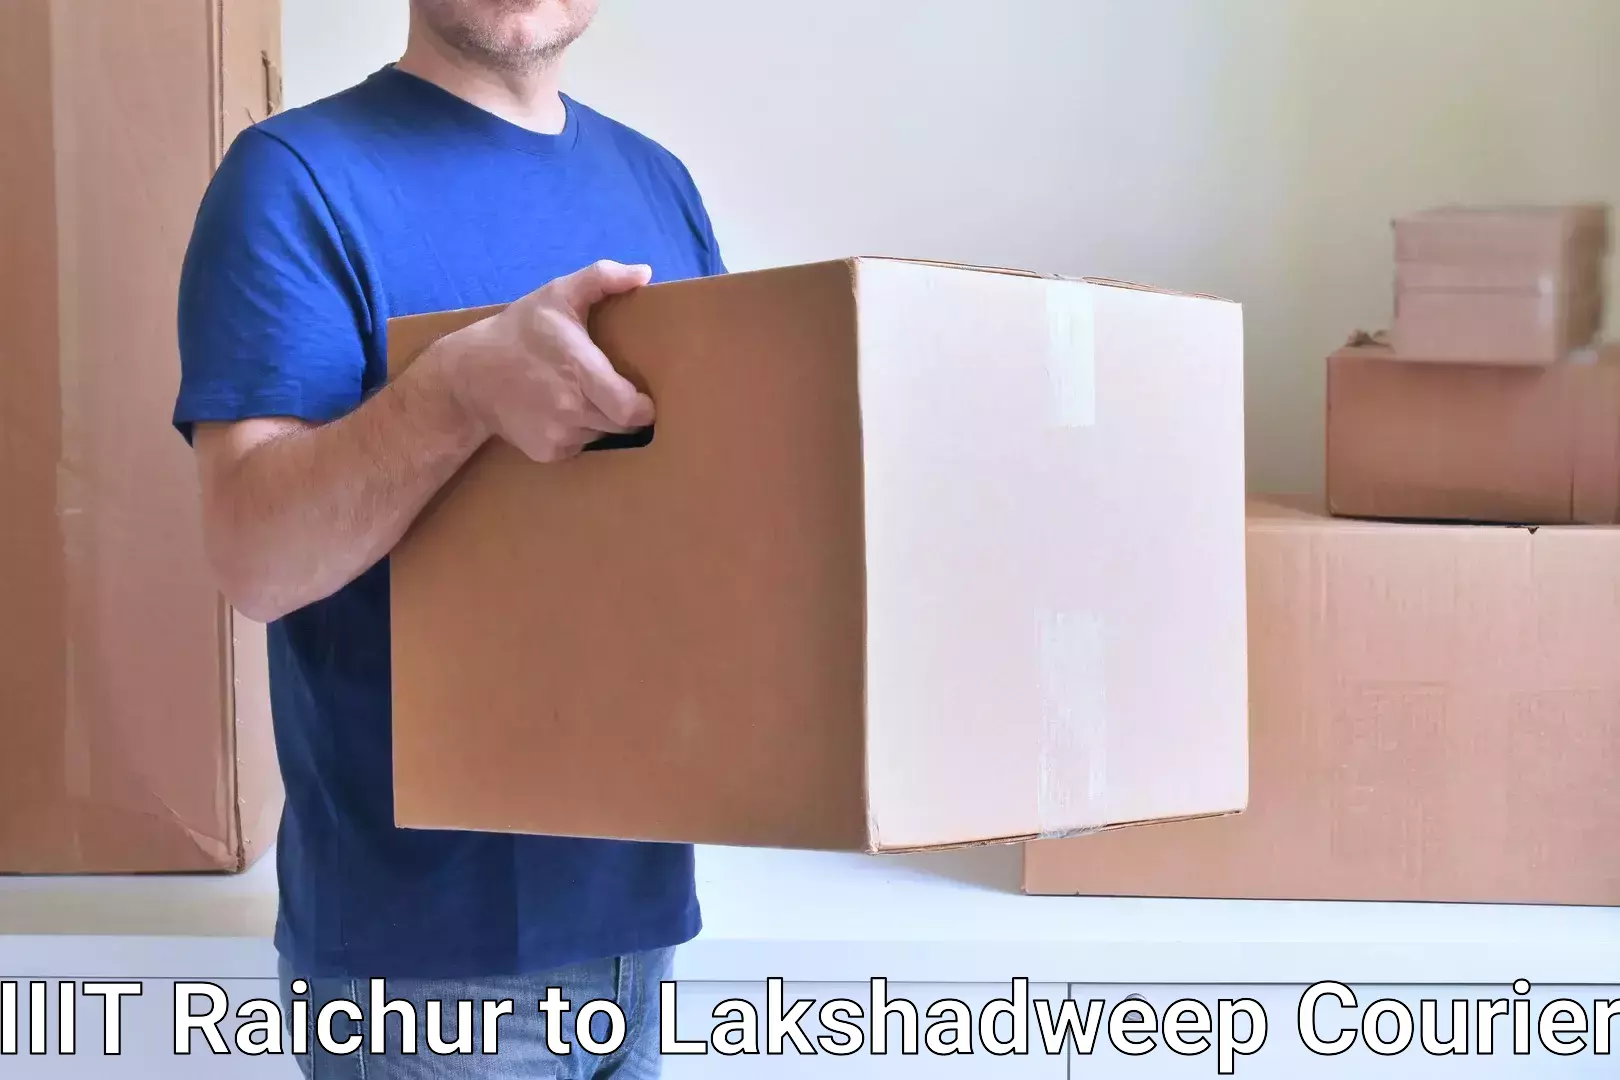 Customer-focused courier IIIT Raichur to Lakshadweep